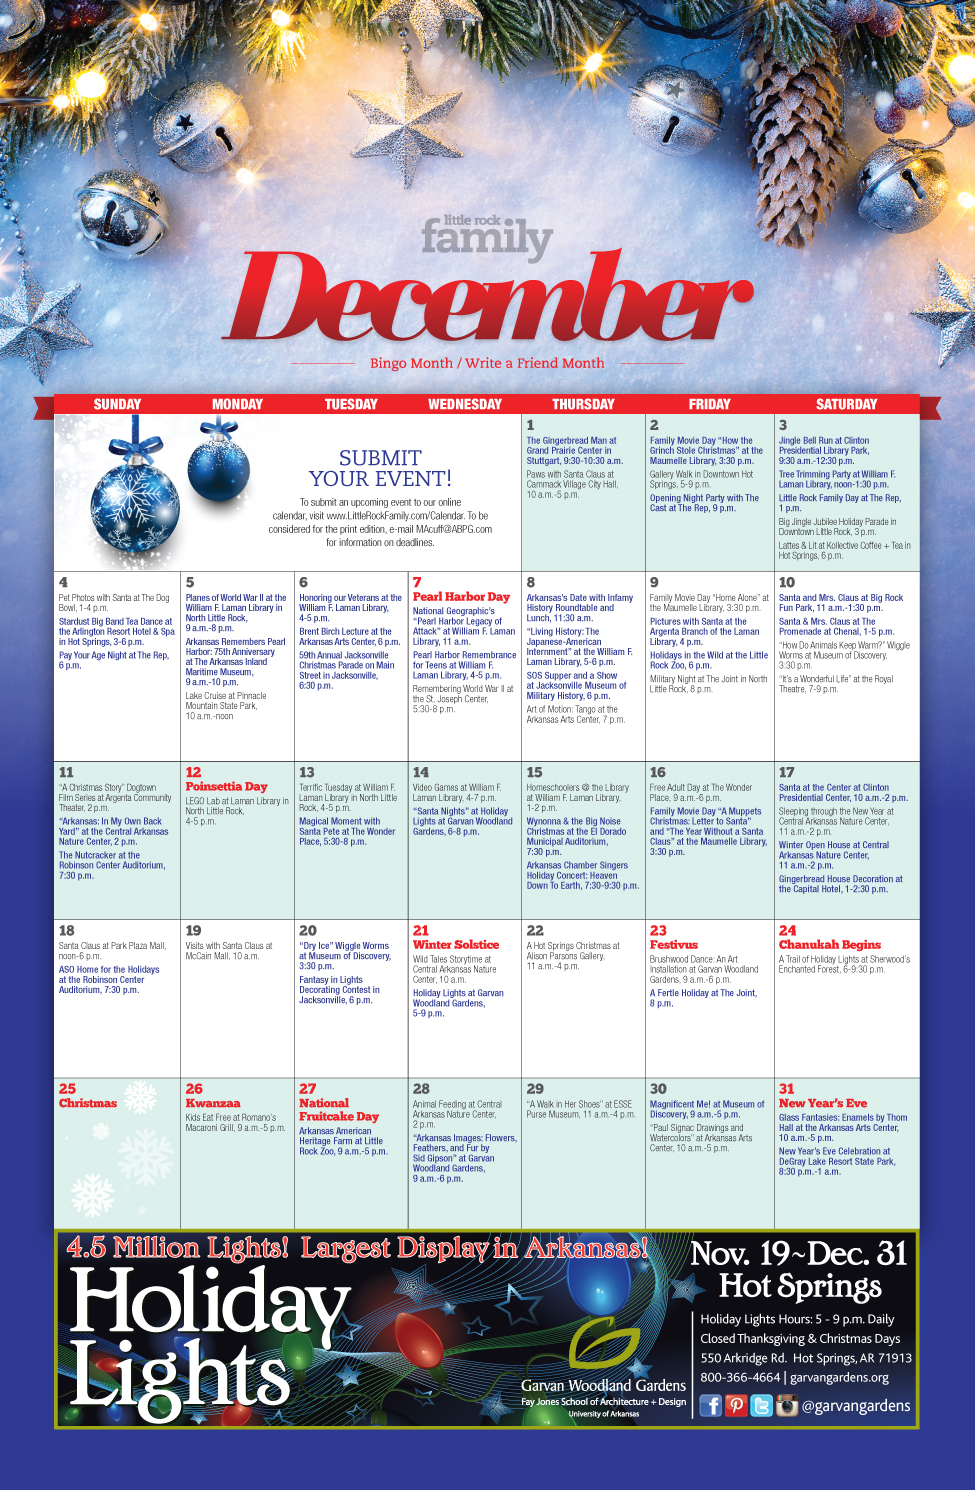 Little Rock Calendar Events Ros Kristel